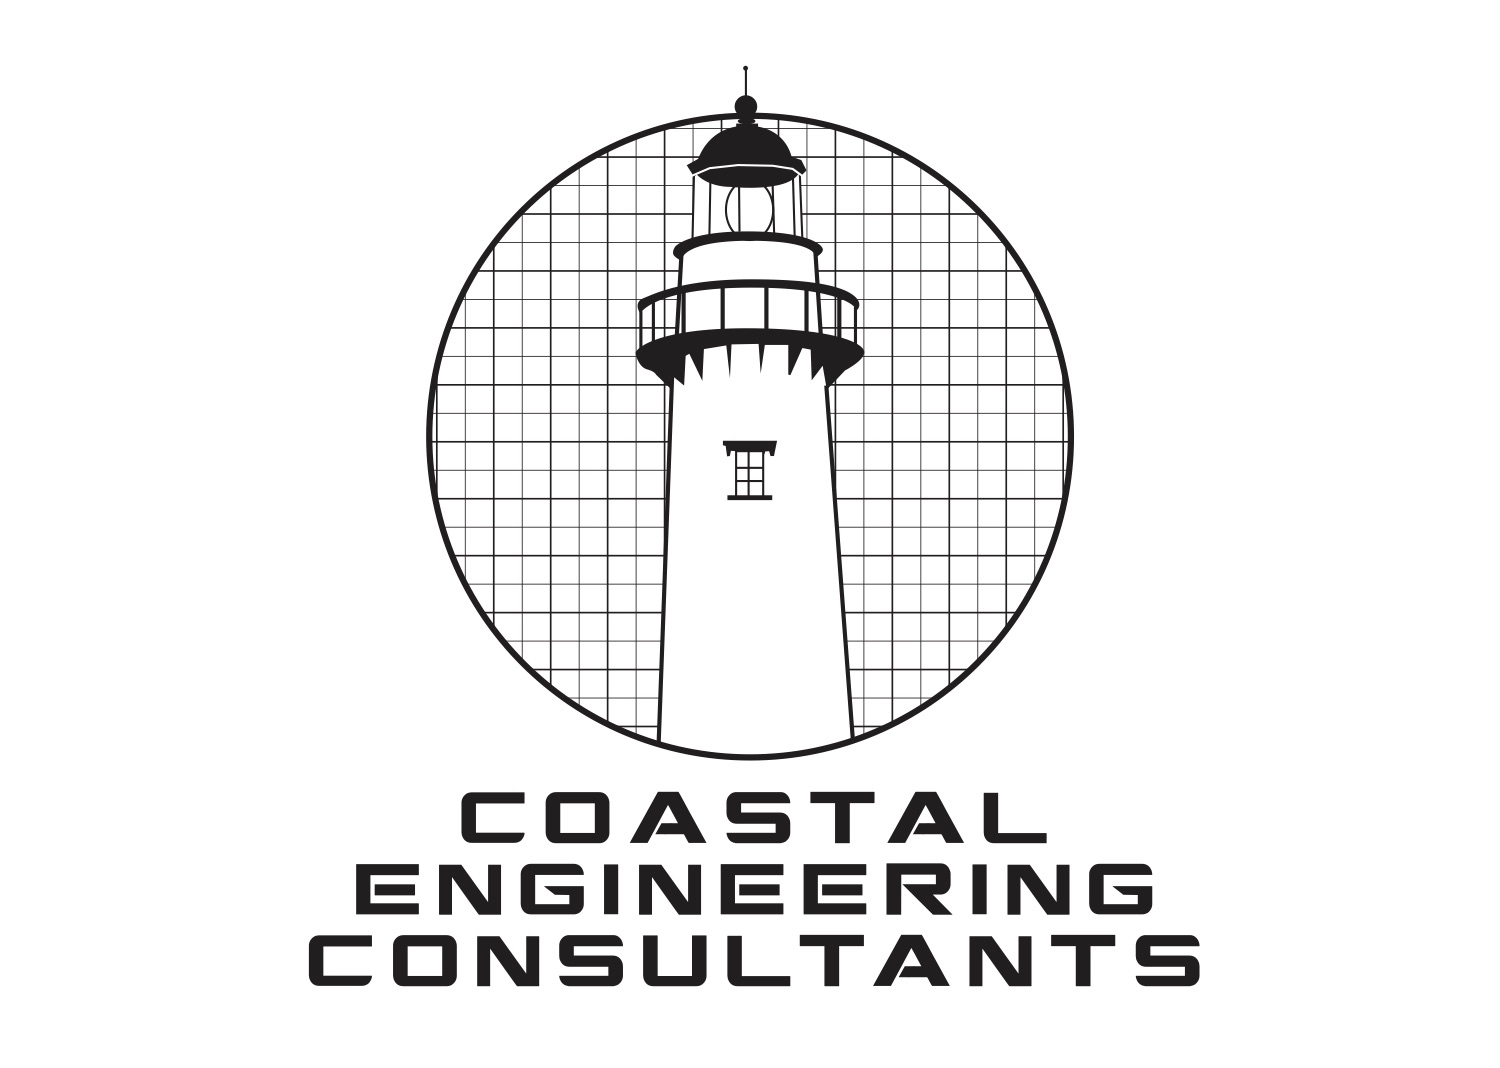 Coastal Engineering Consultants, Inc.